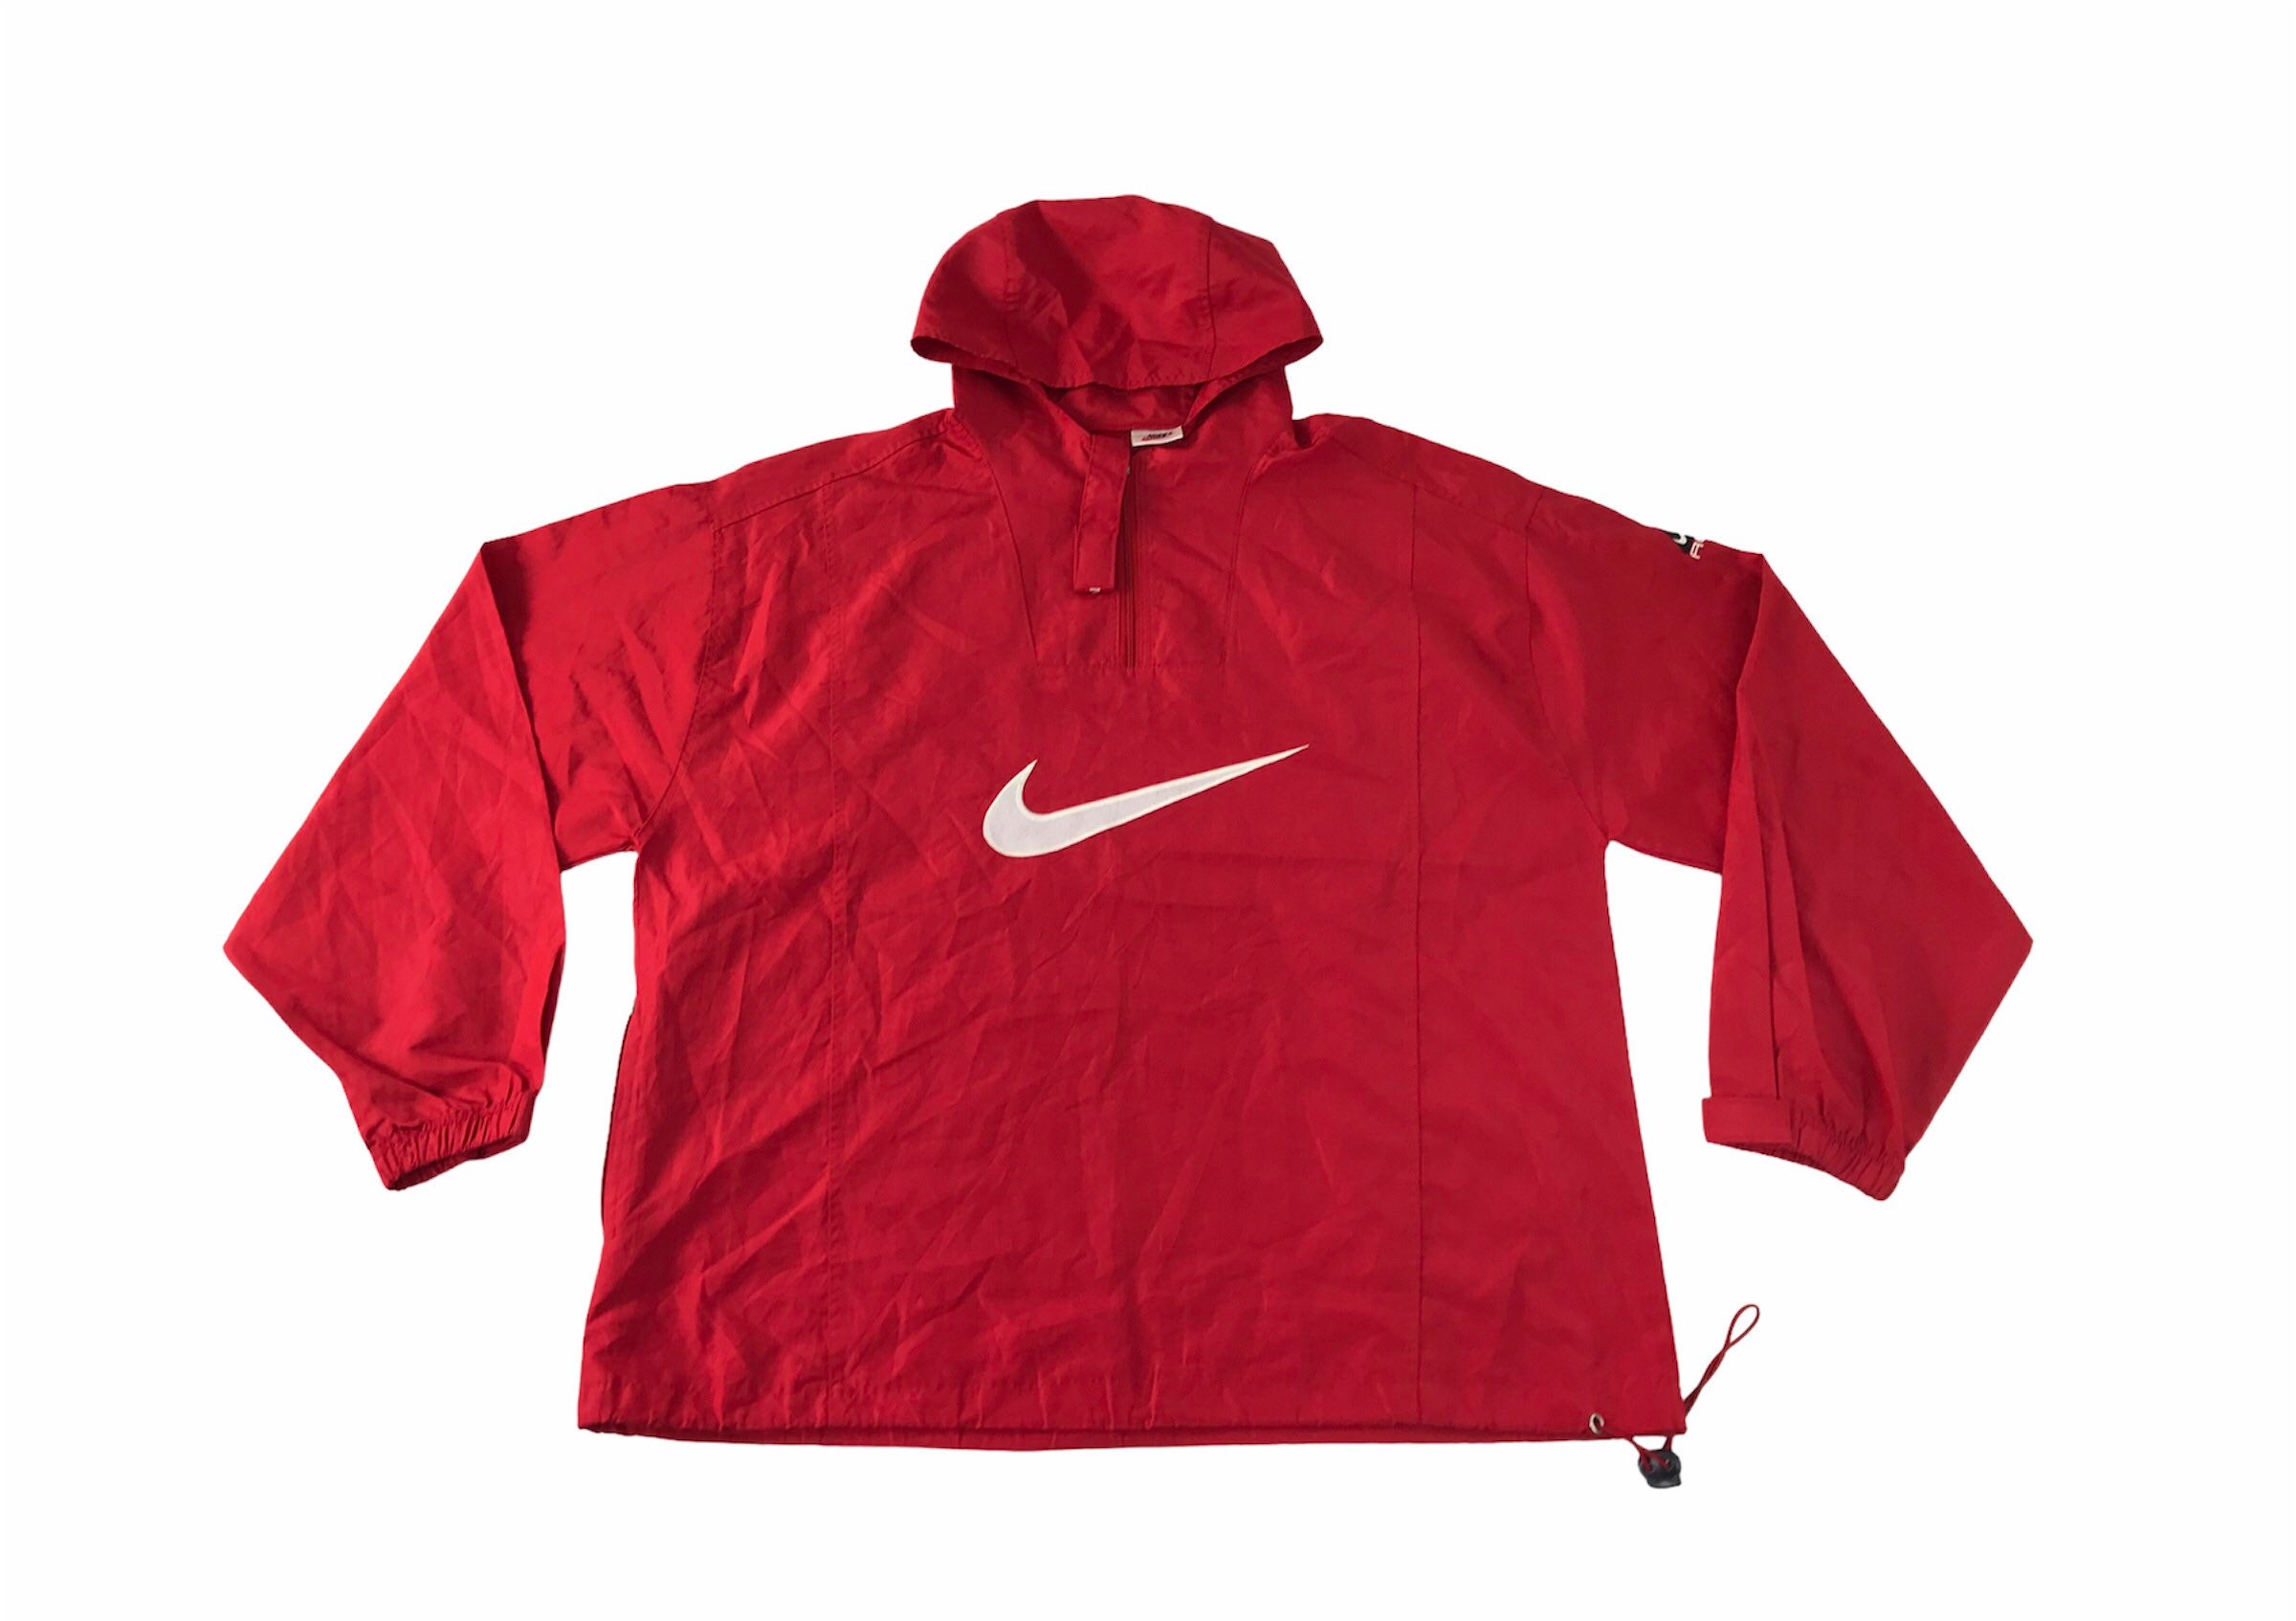 Buy Nike Jacket Online - Etsy